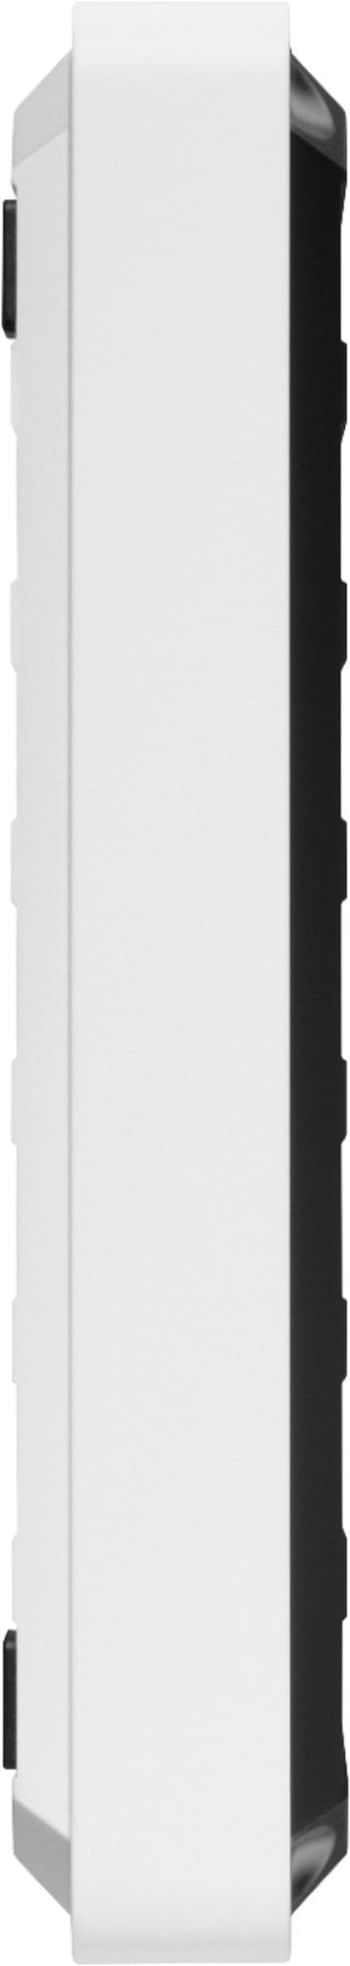 Western Digital Hard Drive WD Black P10 Game Drive For Xbox (WDBA5G0050BBK-WESN) 5TB Black